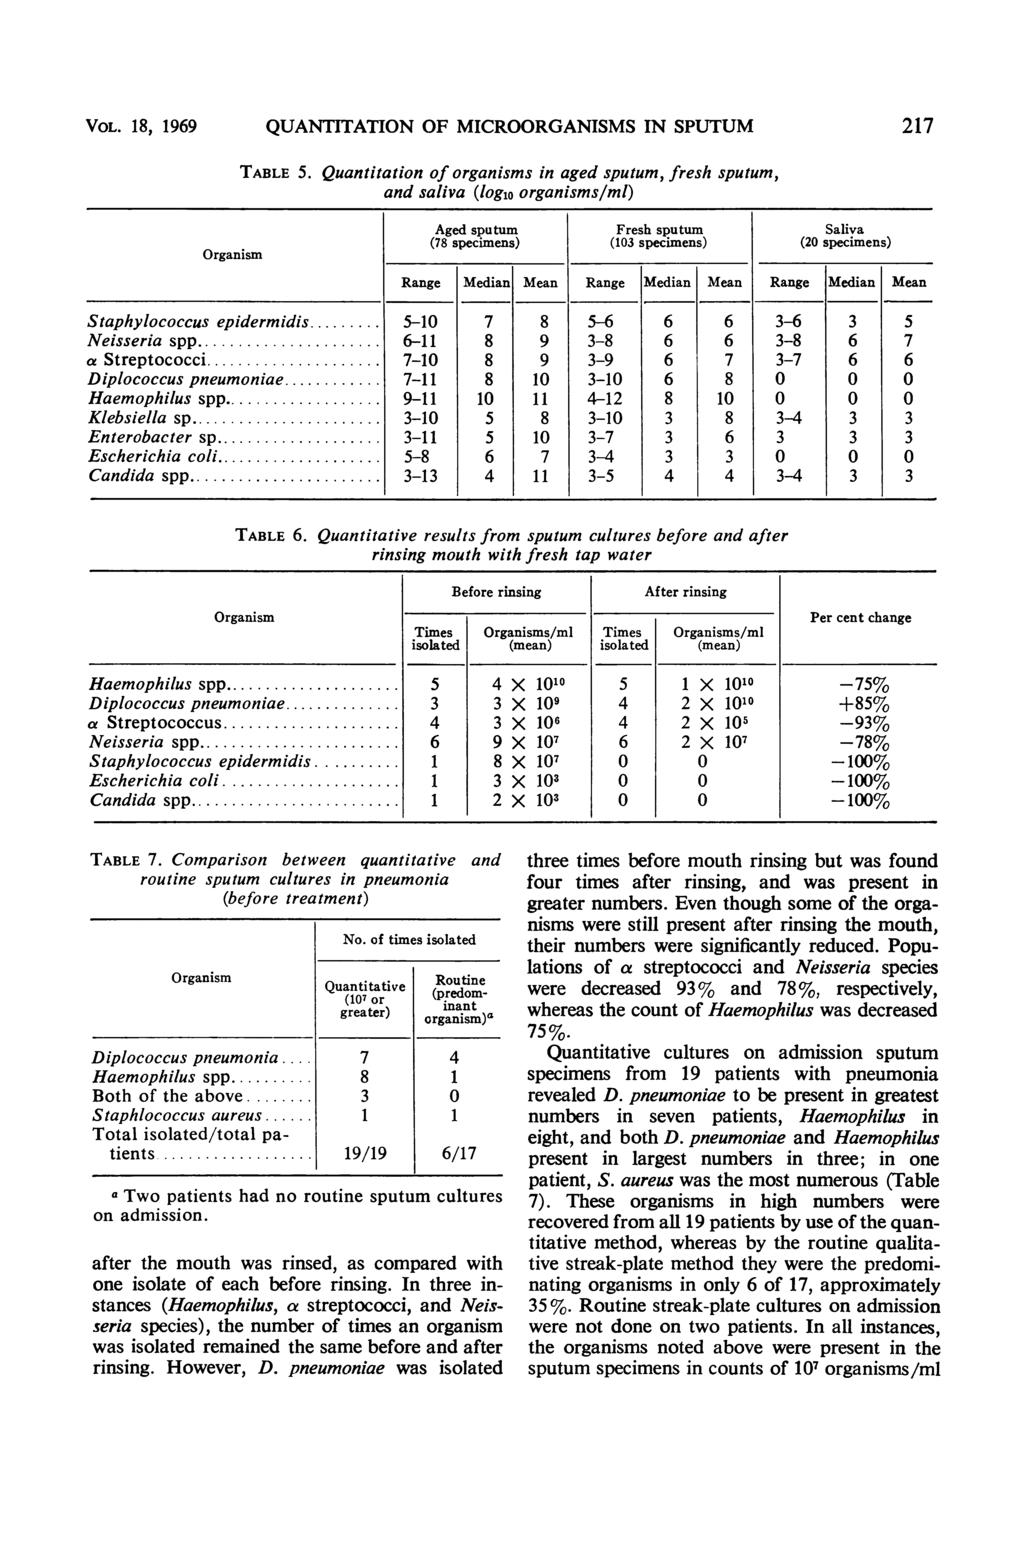 VOL. 18, 1969 QUANTITATION OF MICROORGANISMS IN SPUTUM 217 Organism TABLE 5.